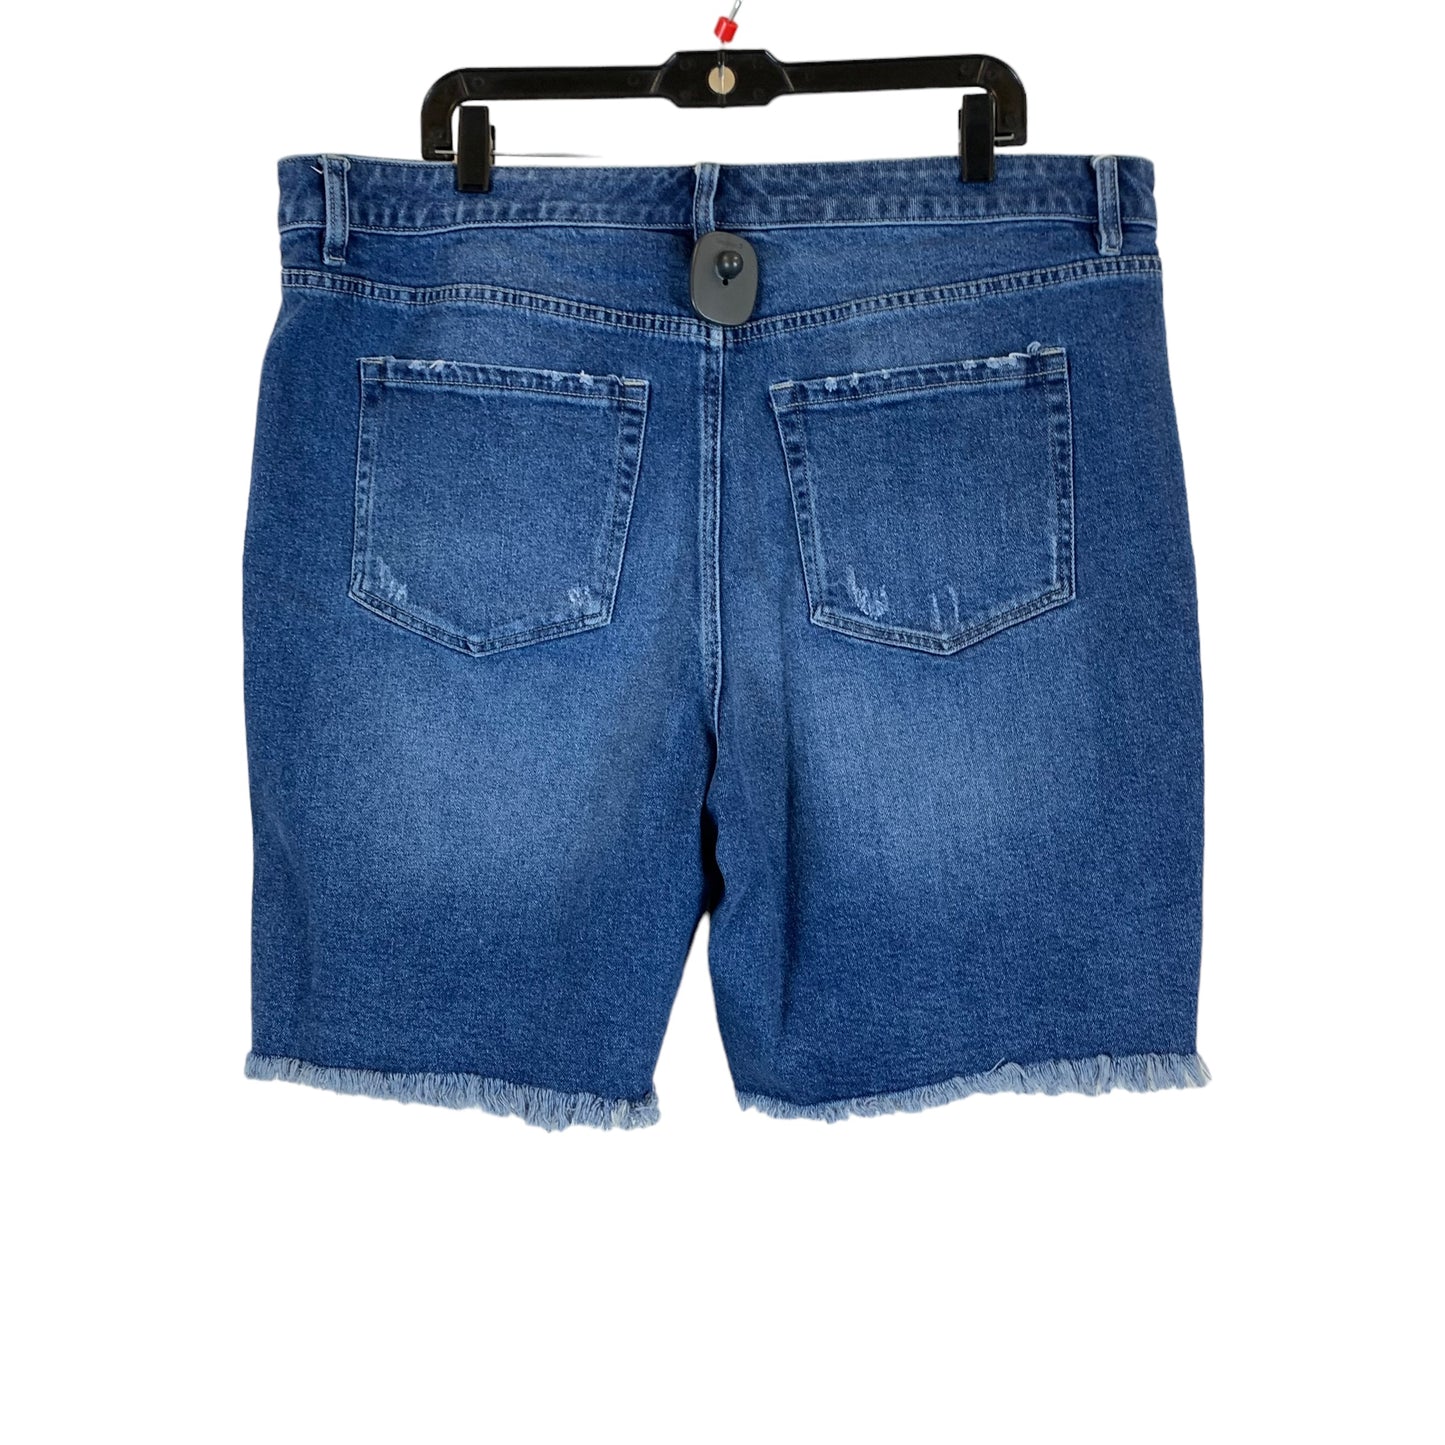 Shorts By Lane Bryant  Size: Xxl